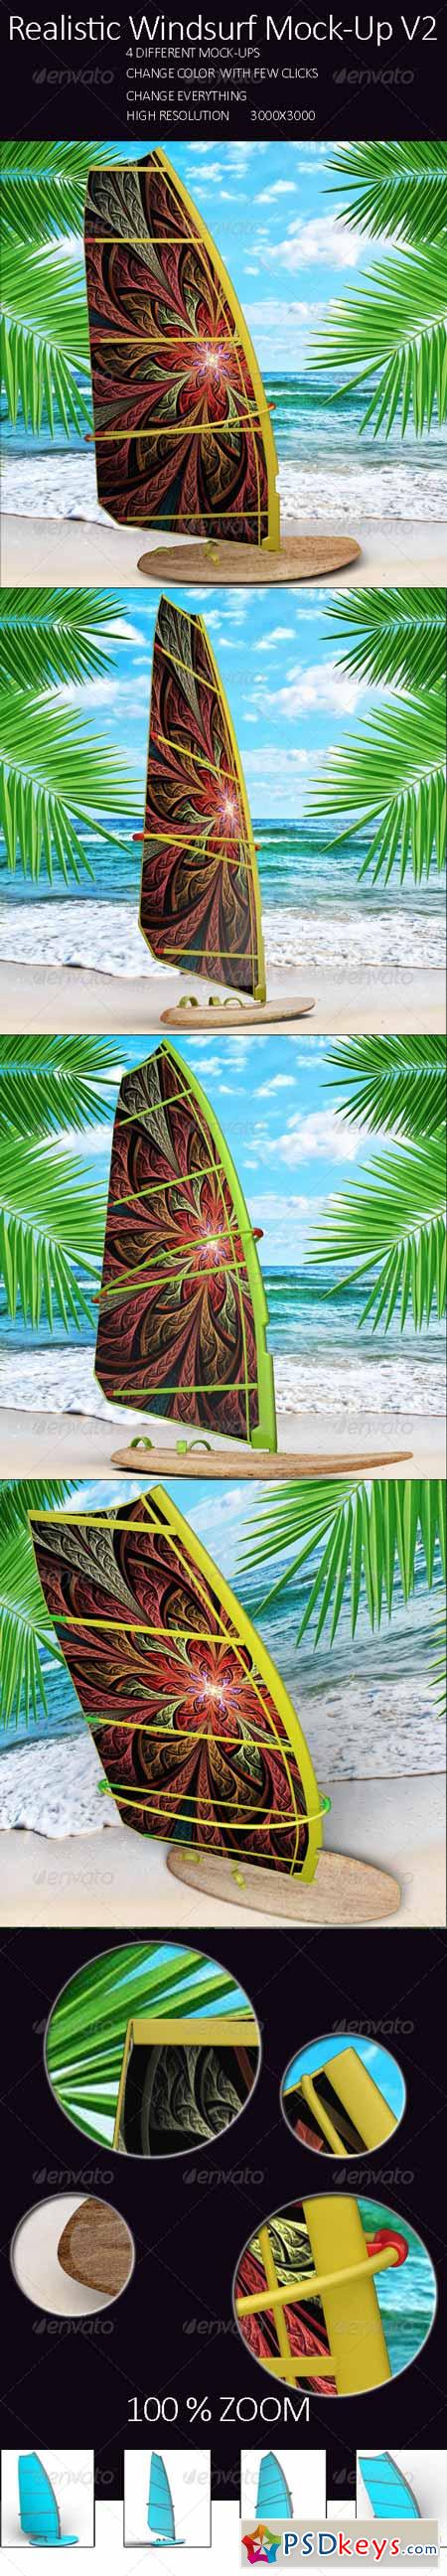 Realistic Windsurf Mock Up Vol.2 7965766